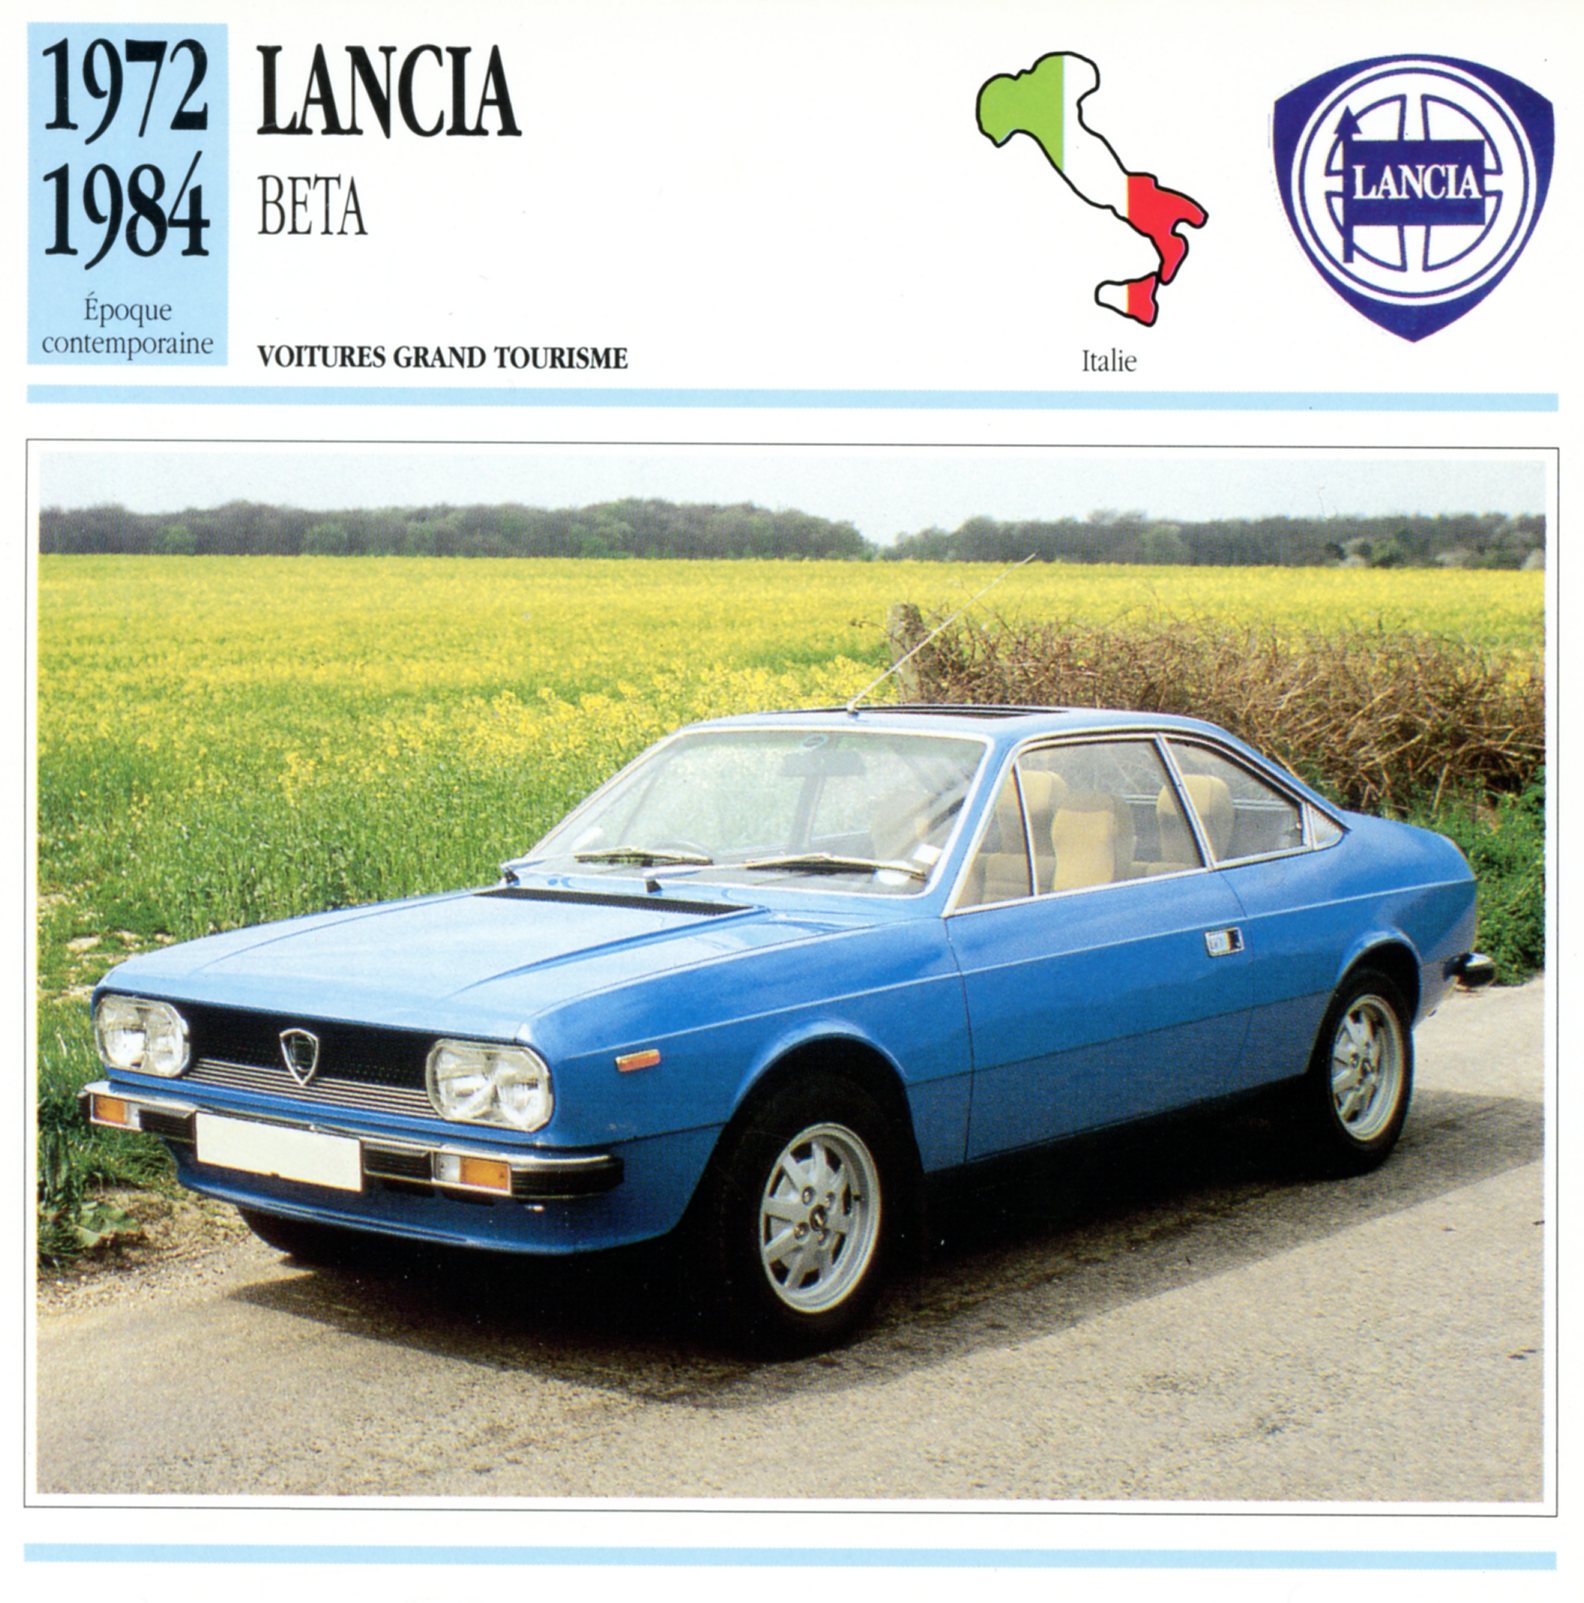 FICHE-AUTO-CARACTÉRISTIQUES-LANCIA-BETA-1972-1984-LEMASTERBROCKERS-CARS-CARD